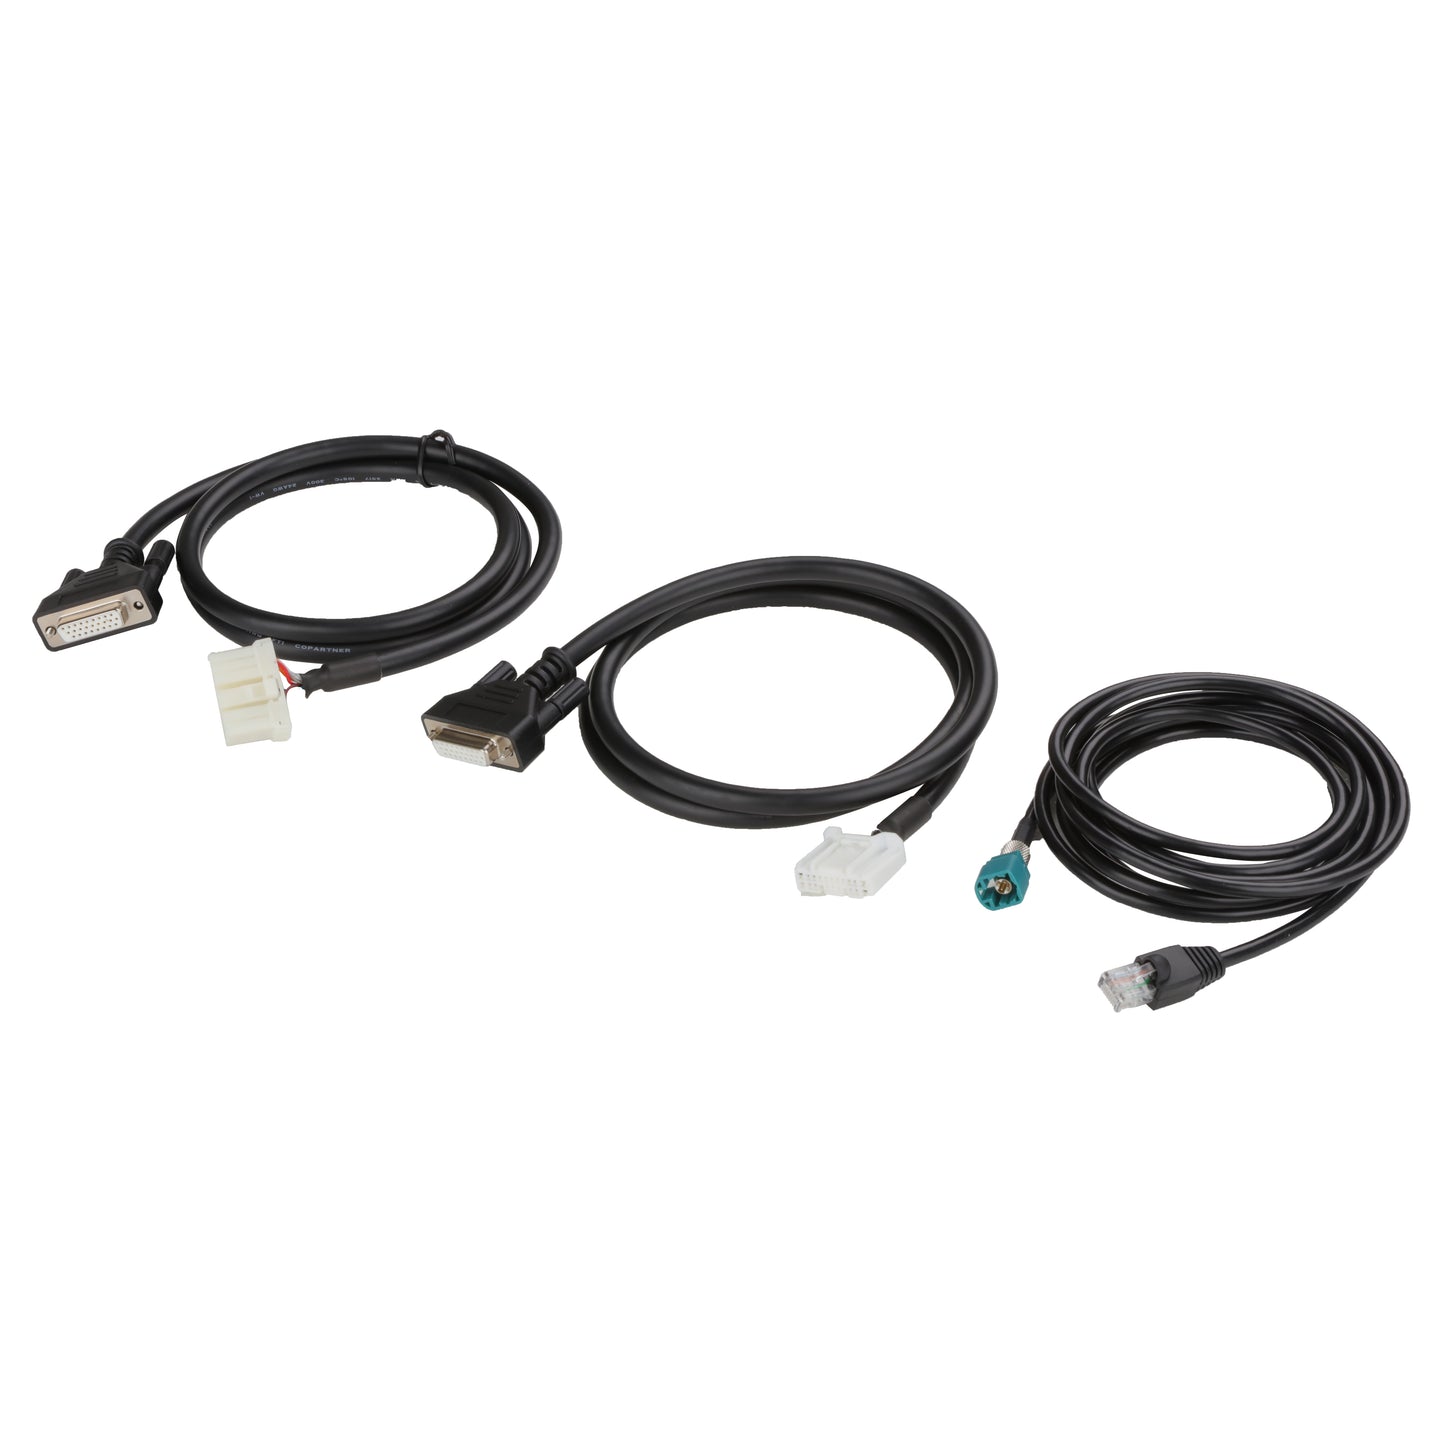 Autel TESKIT - Tesla Cable Kit